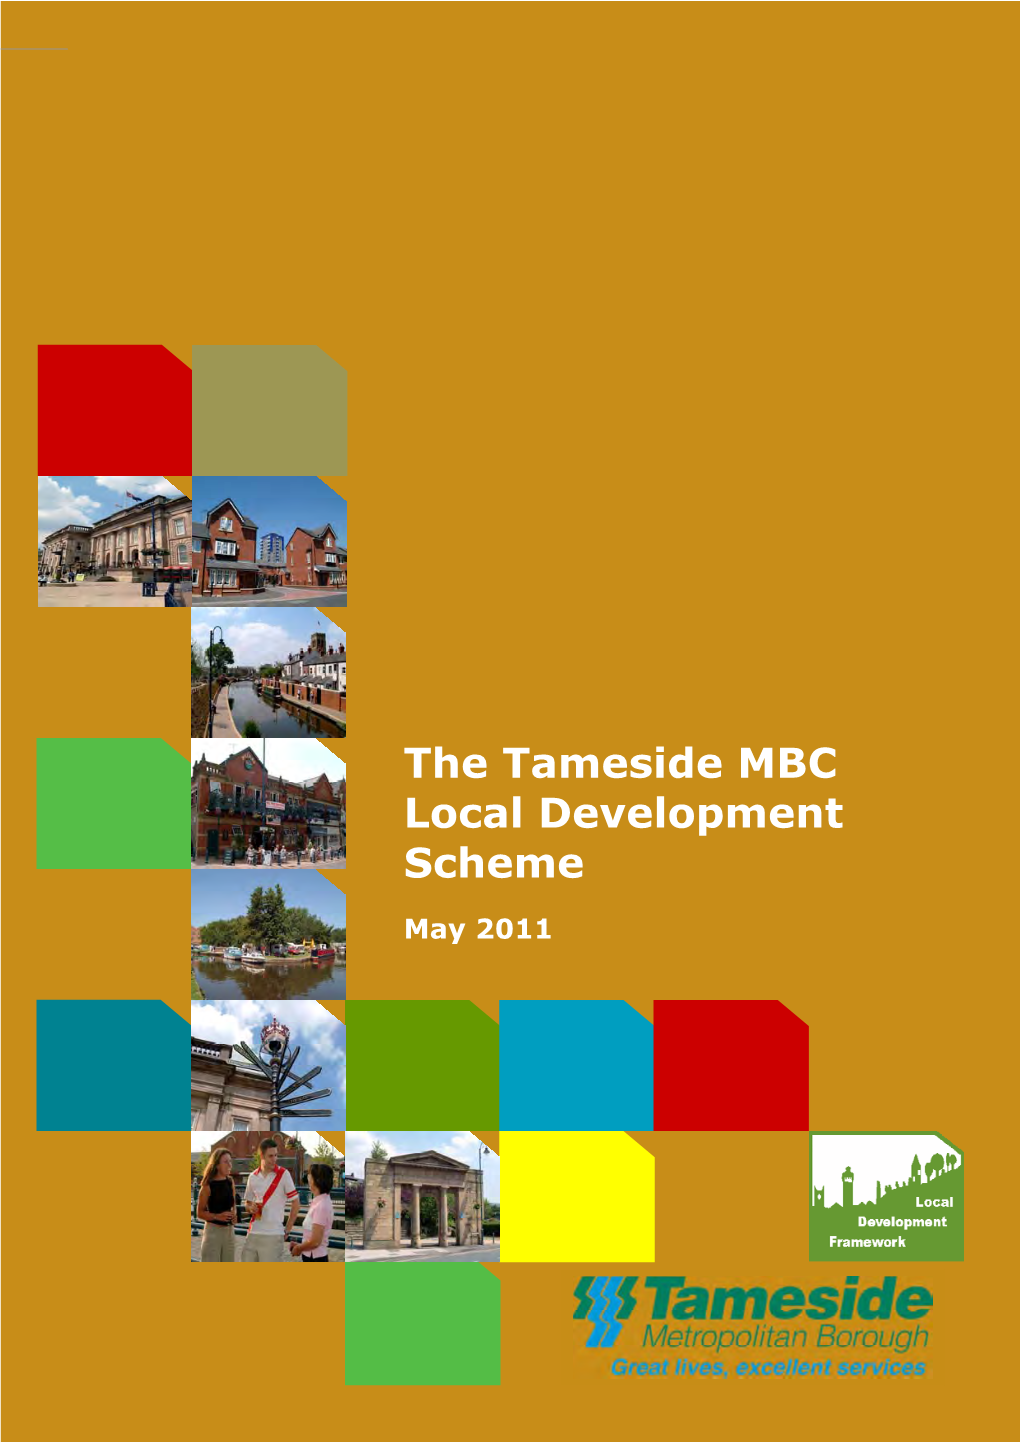 The Tameside MBC Local Development Scheme